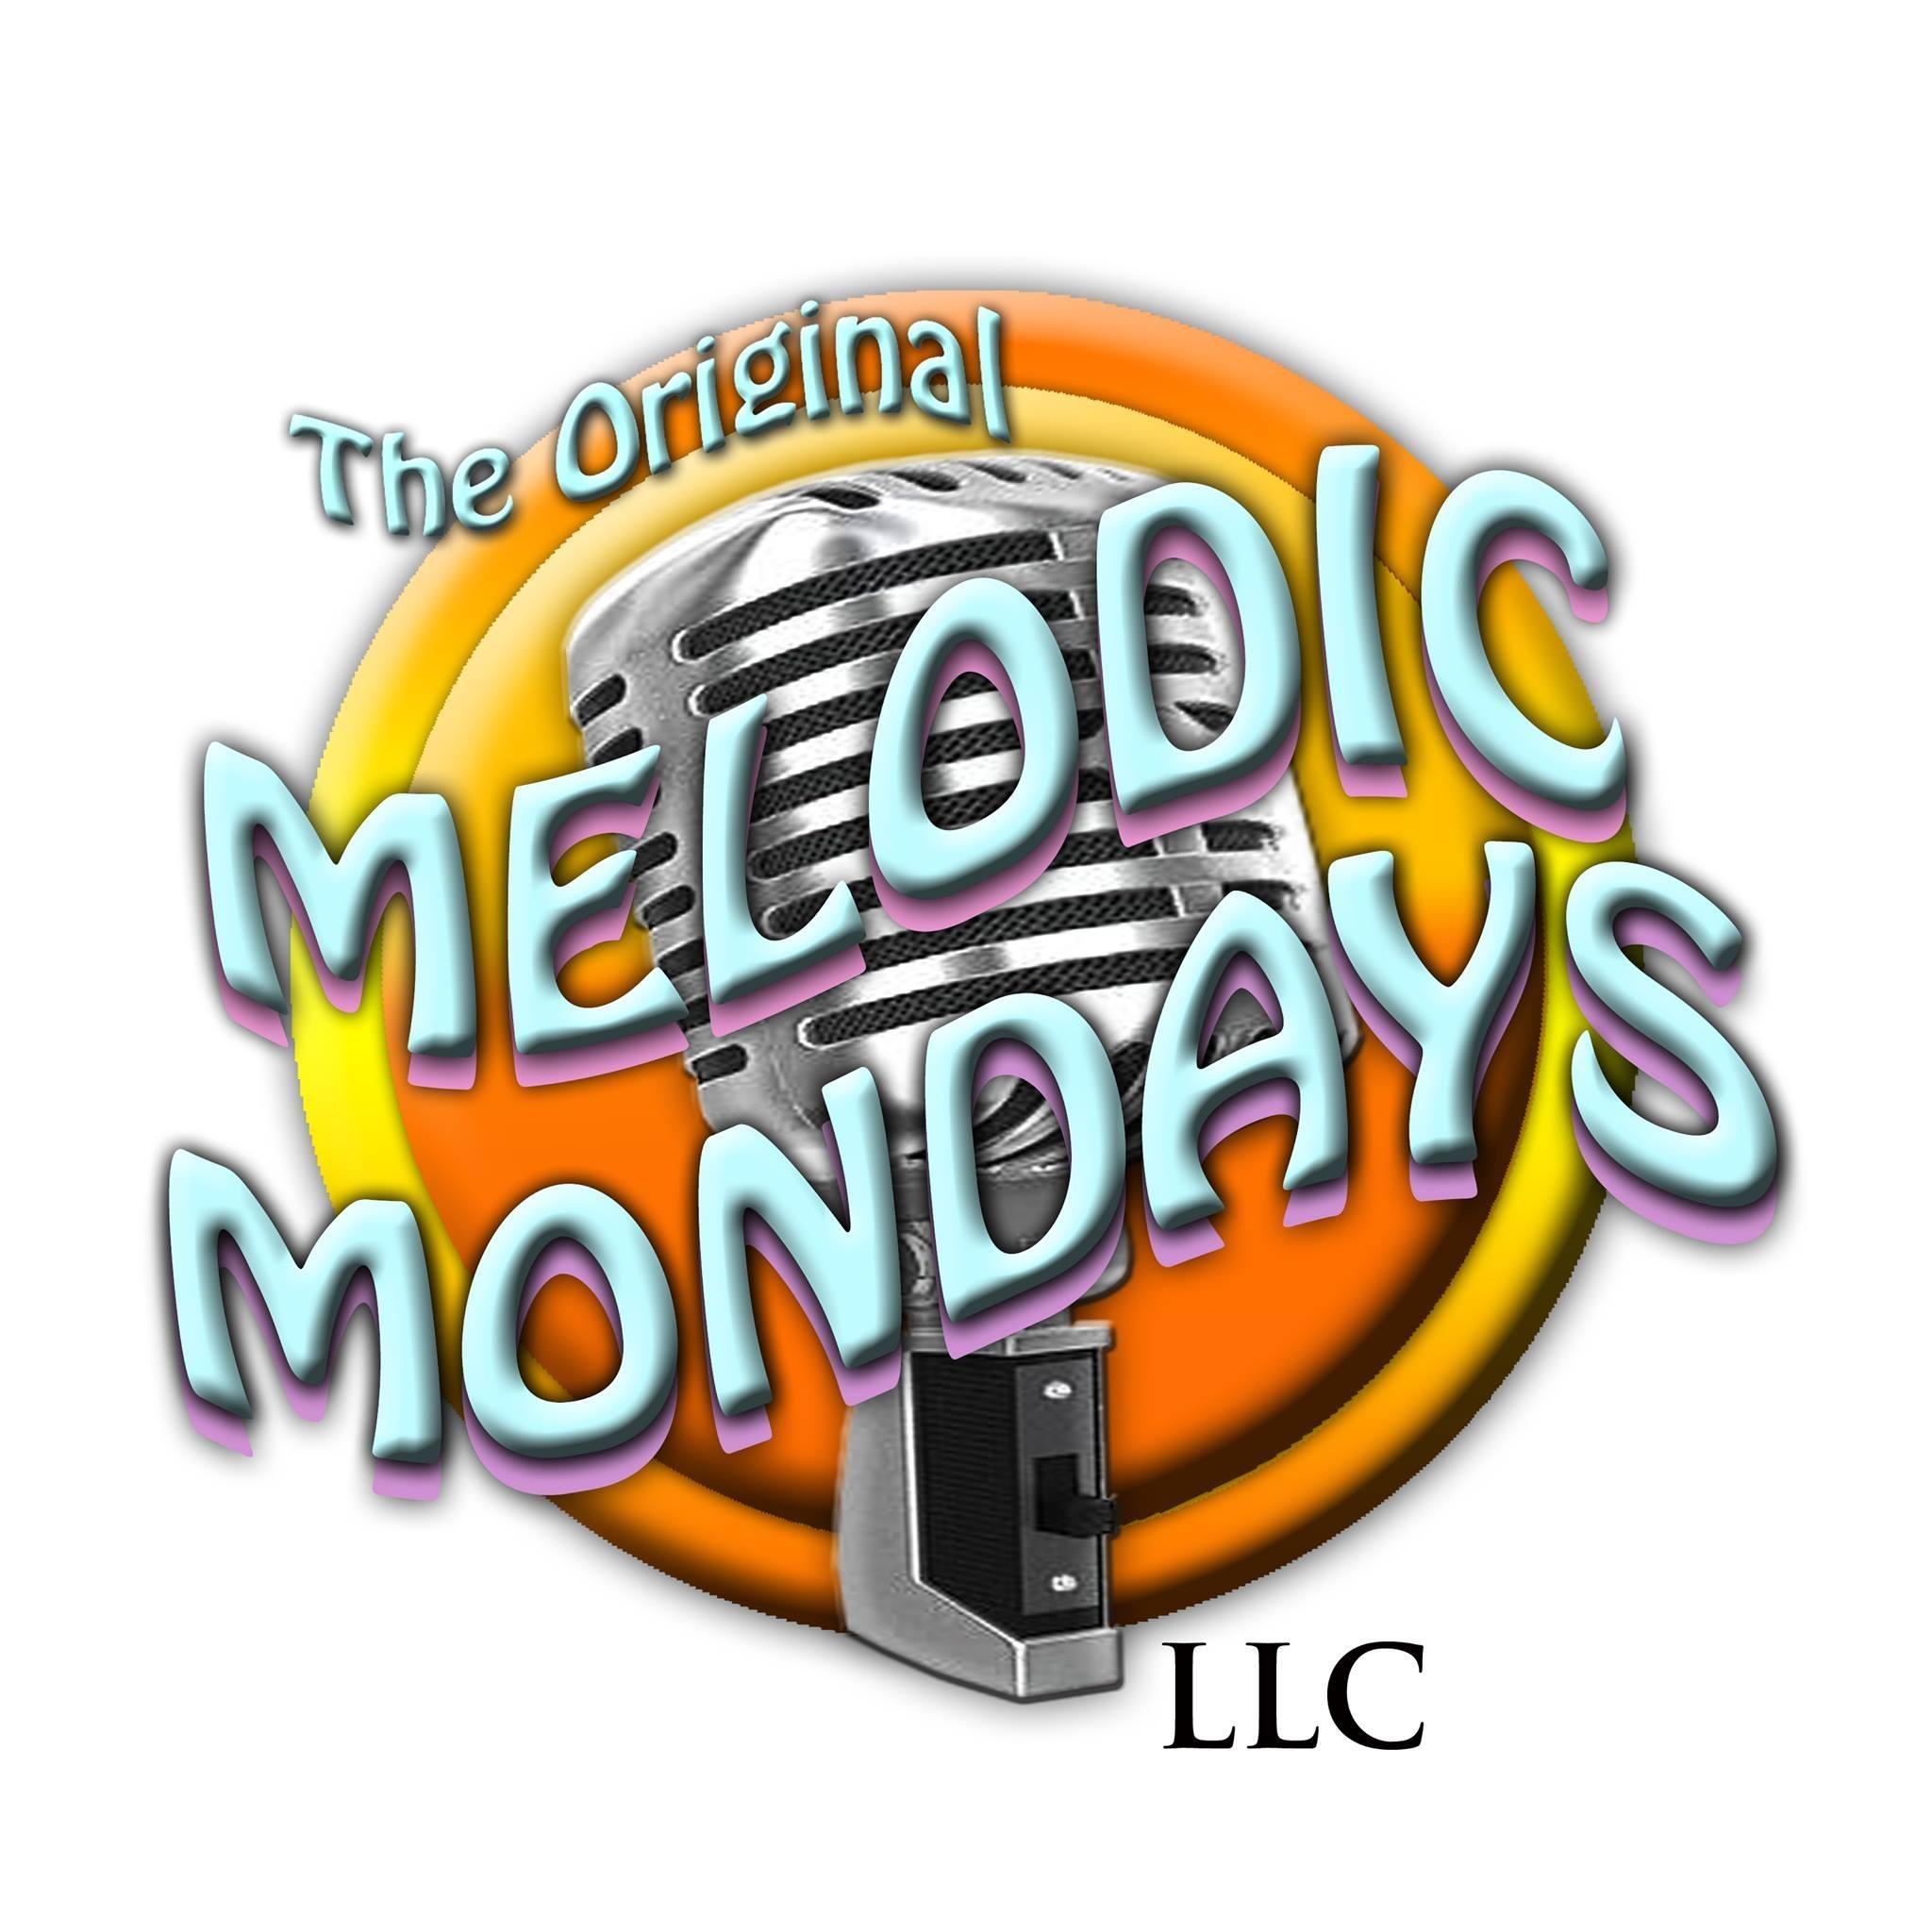 The Original Melodic Mondays